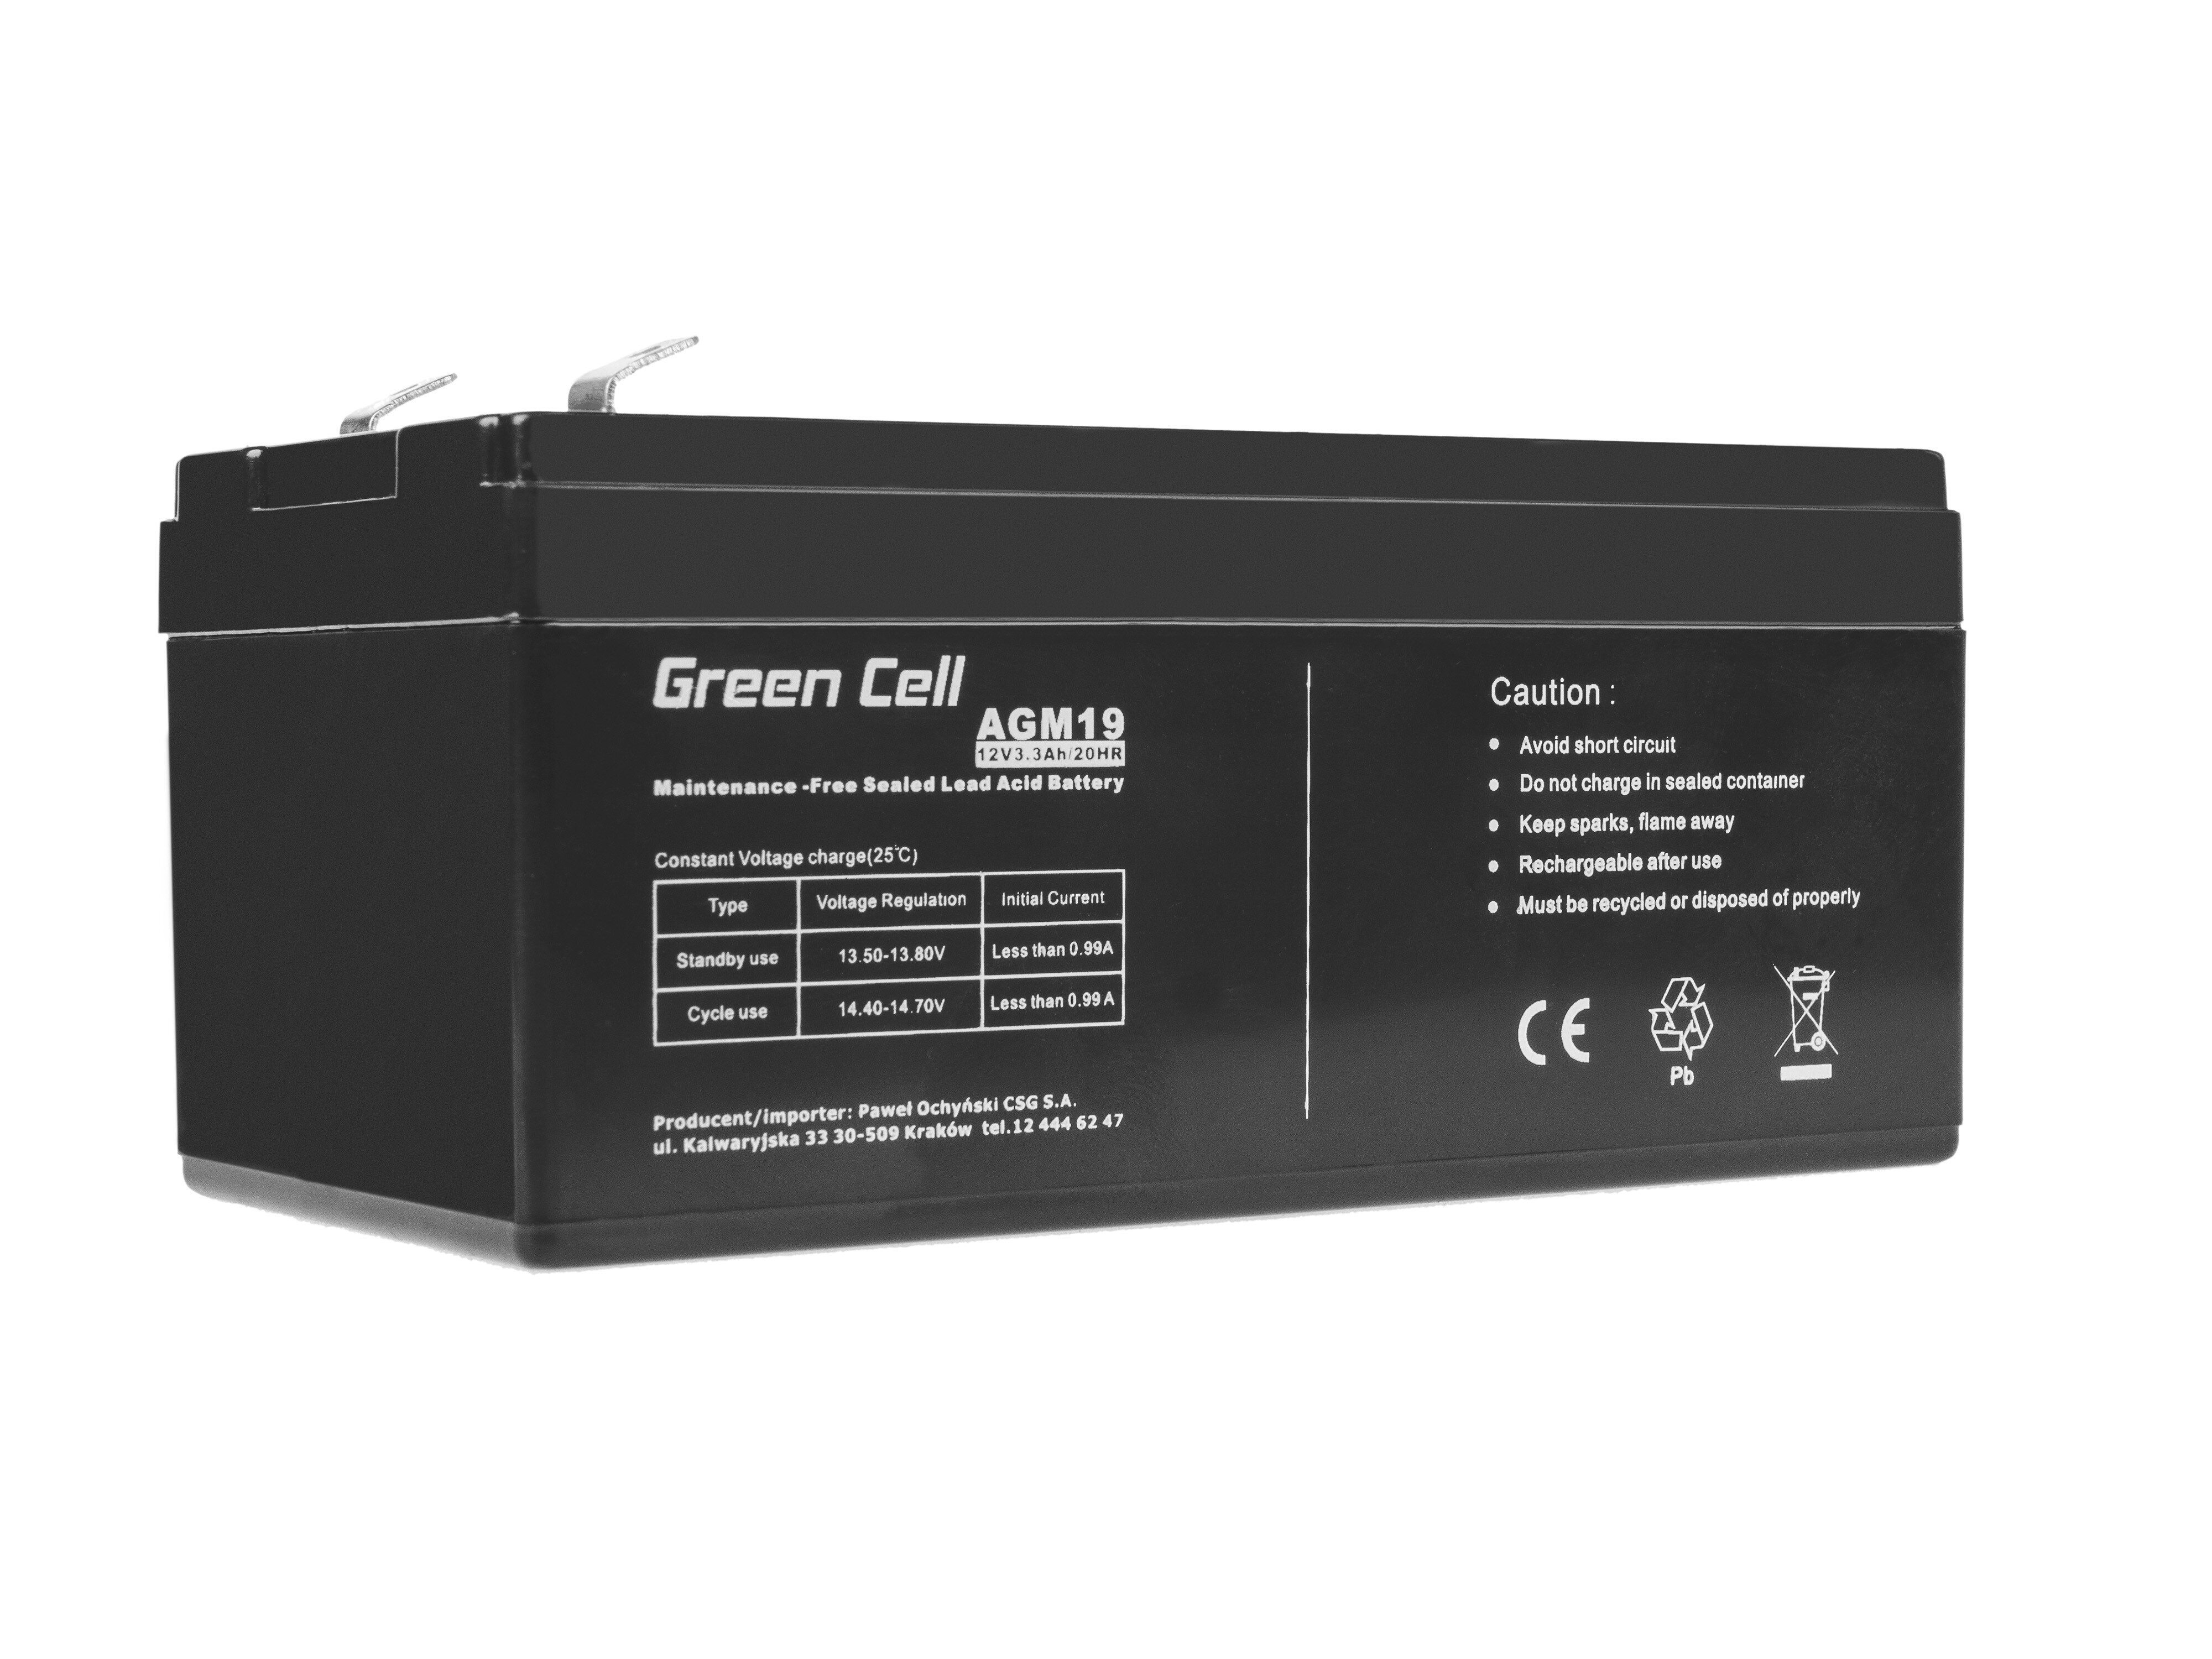 Green Cell AGM VRLA 12v 3.3AH be priežiūros, be aliarmo sistemos, kasos,  kasos, žaislai kaina | pigu.lt